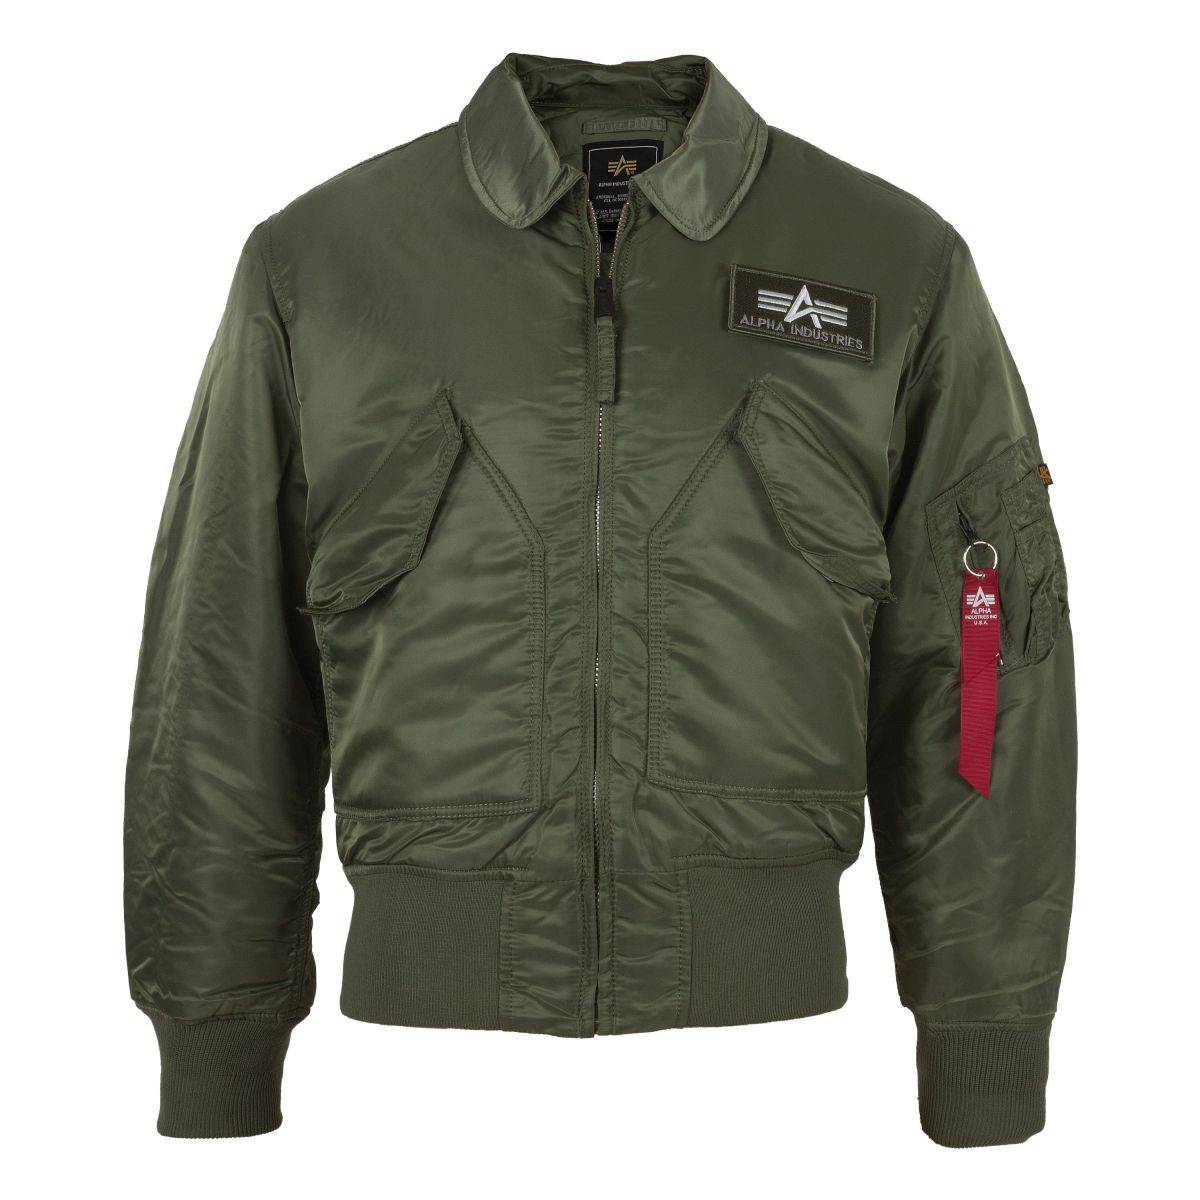 Purchase the Alpha Flight Jacket CWU olive by ASMC